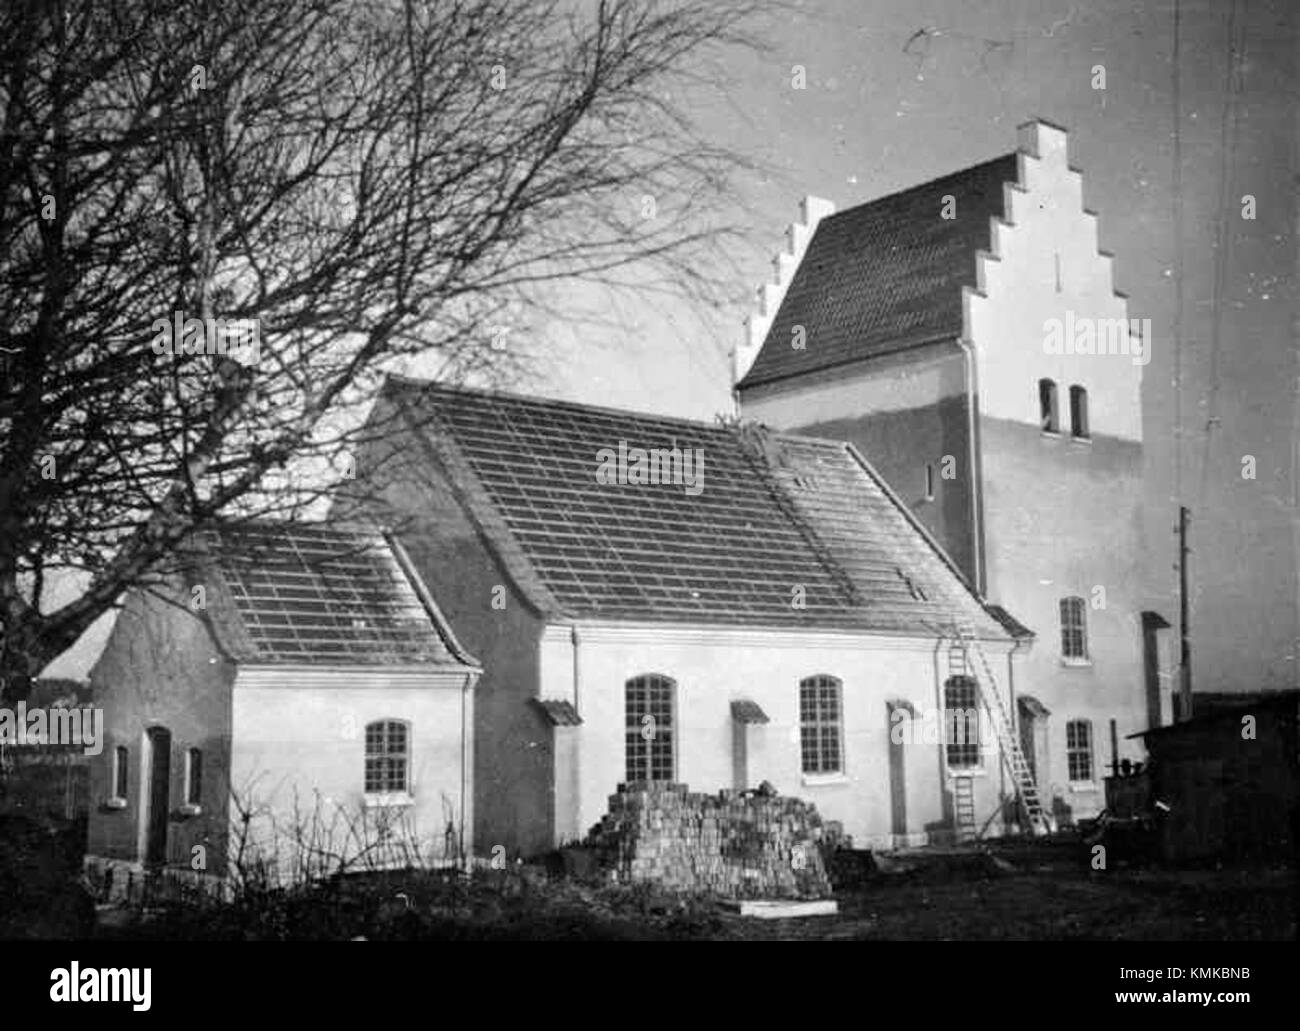 Tyringe kyrka - KMB - 16000200064180 Stock Photo